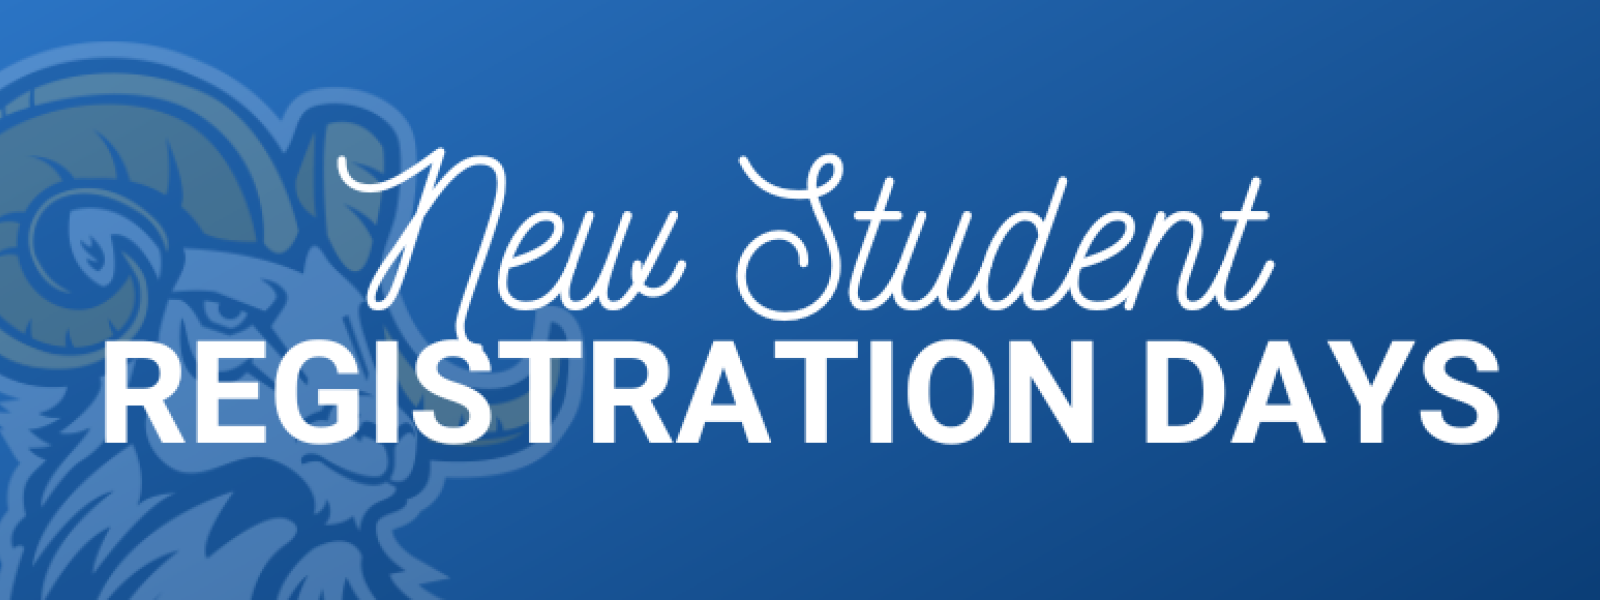 New Student Registration Days at Columbia International University